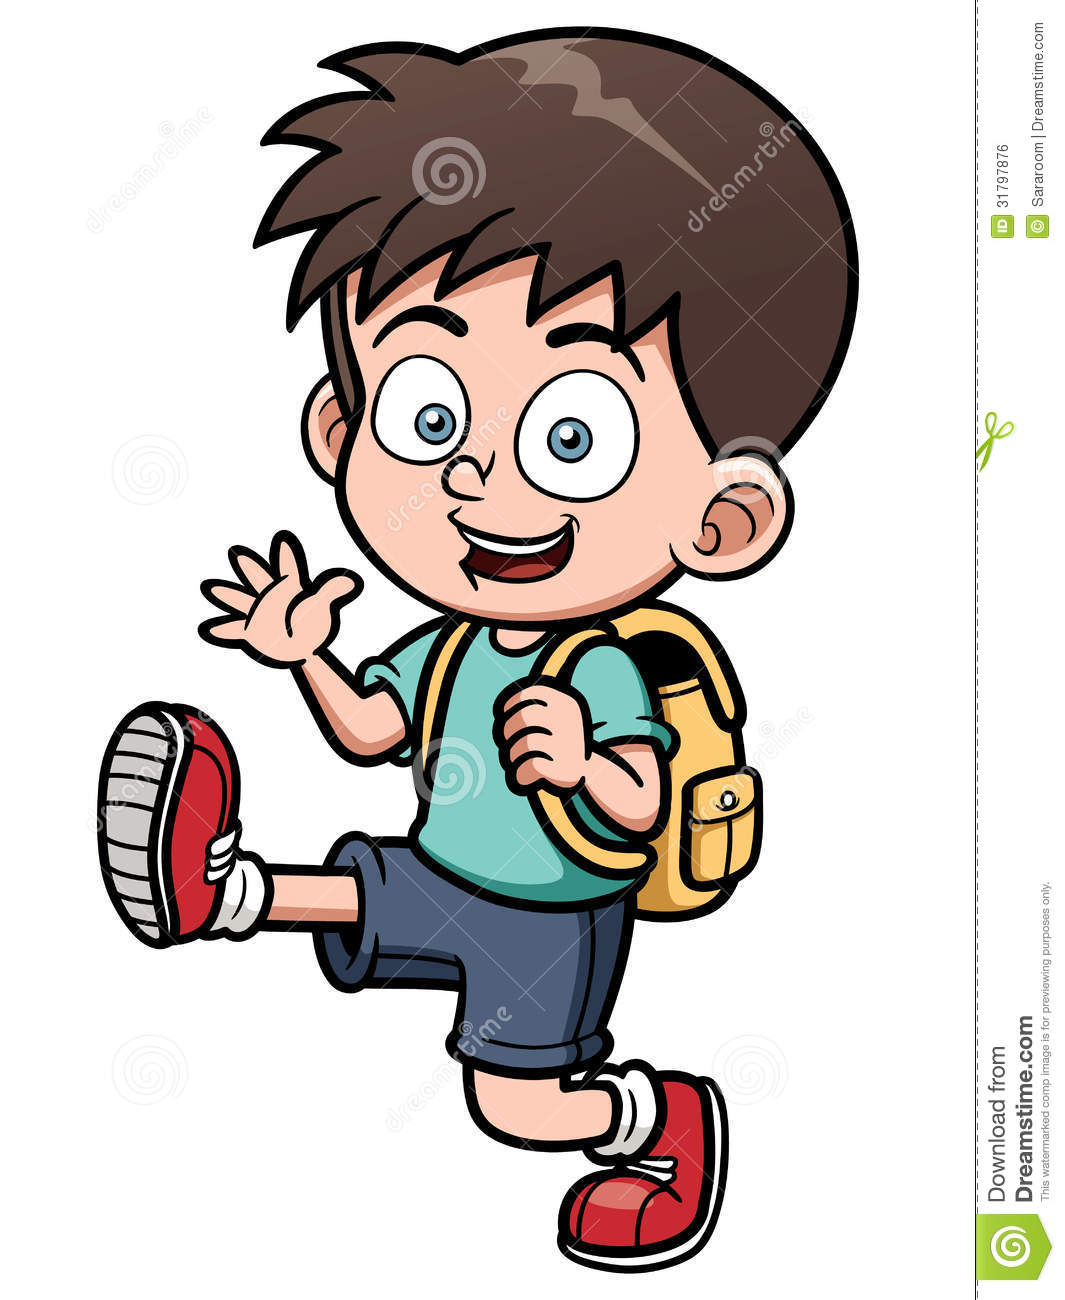 Boy Go To School Royalty Free Stock Image   Image  31797876